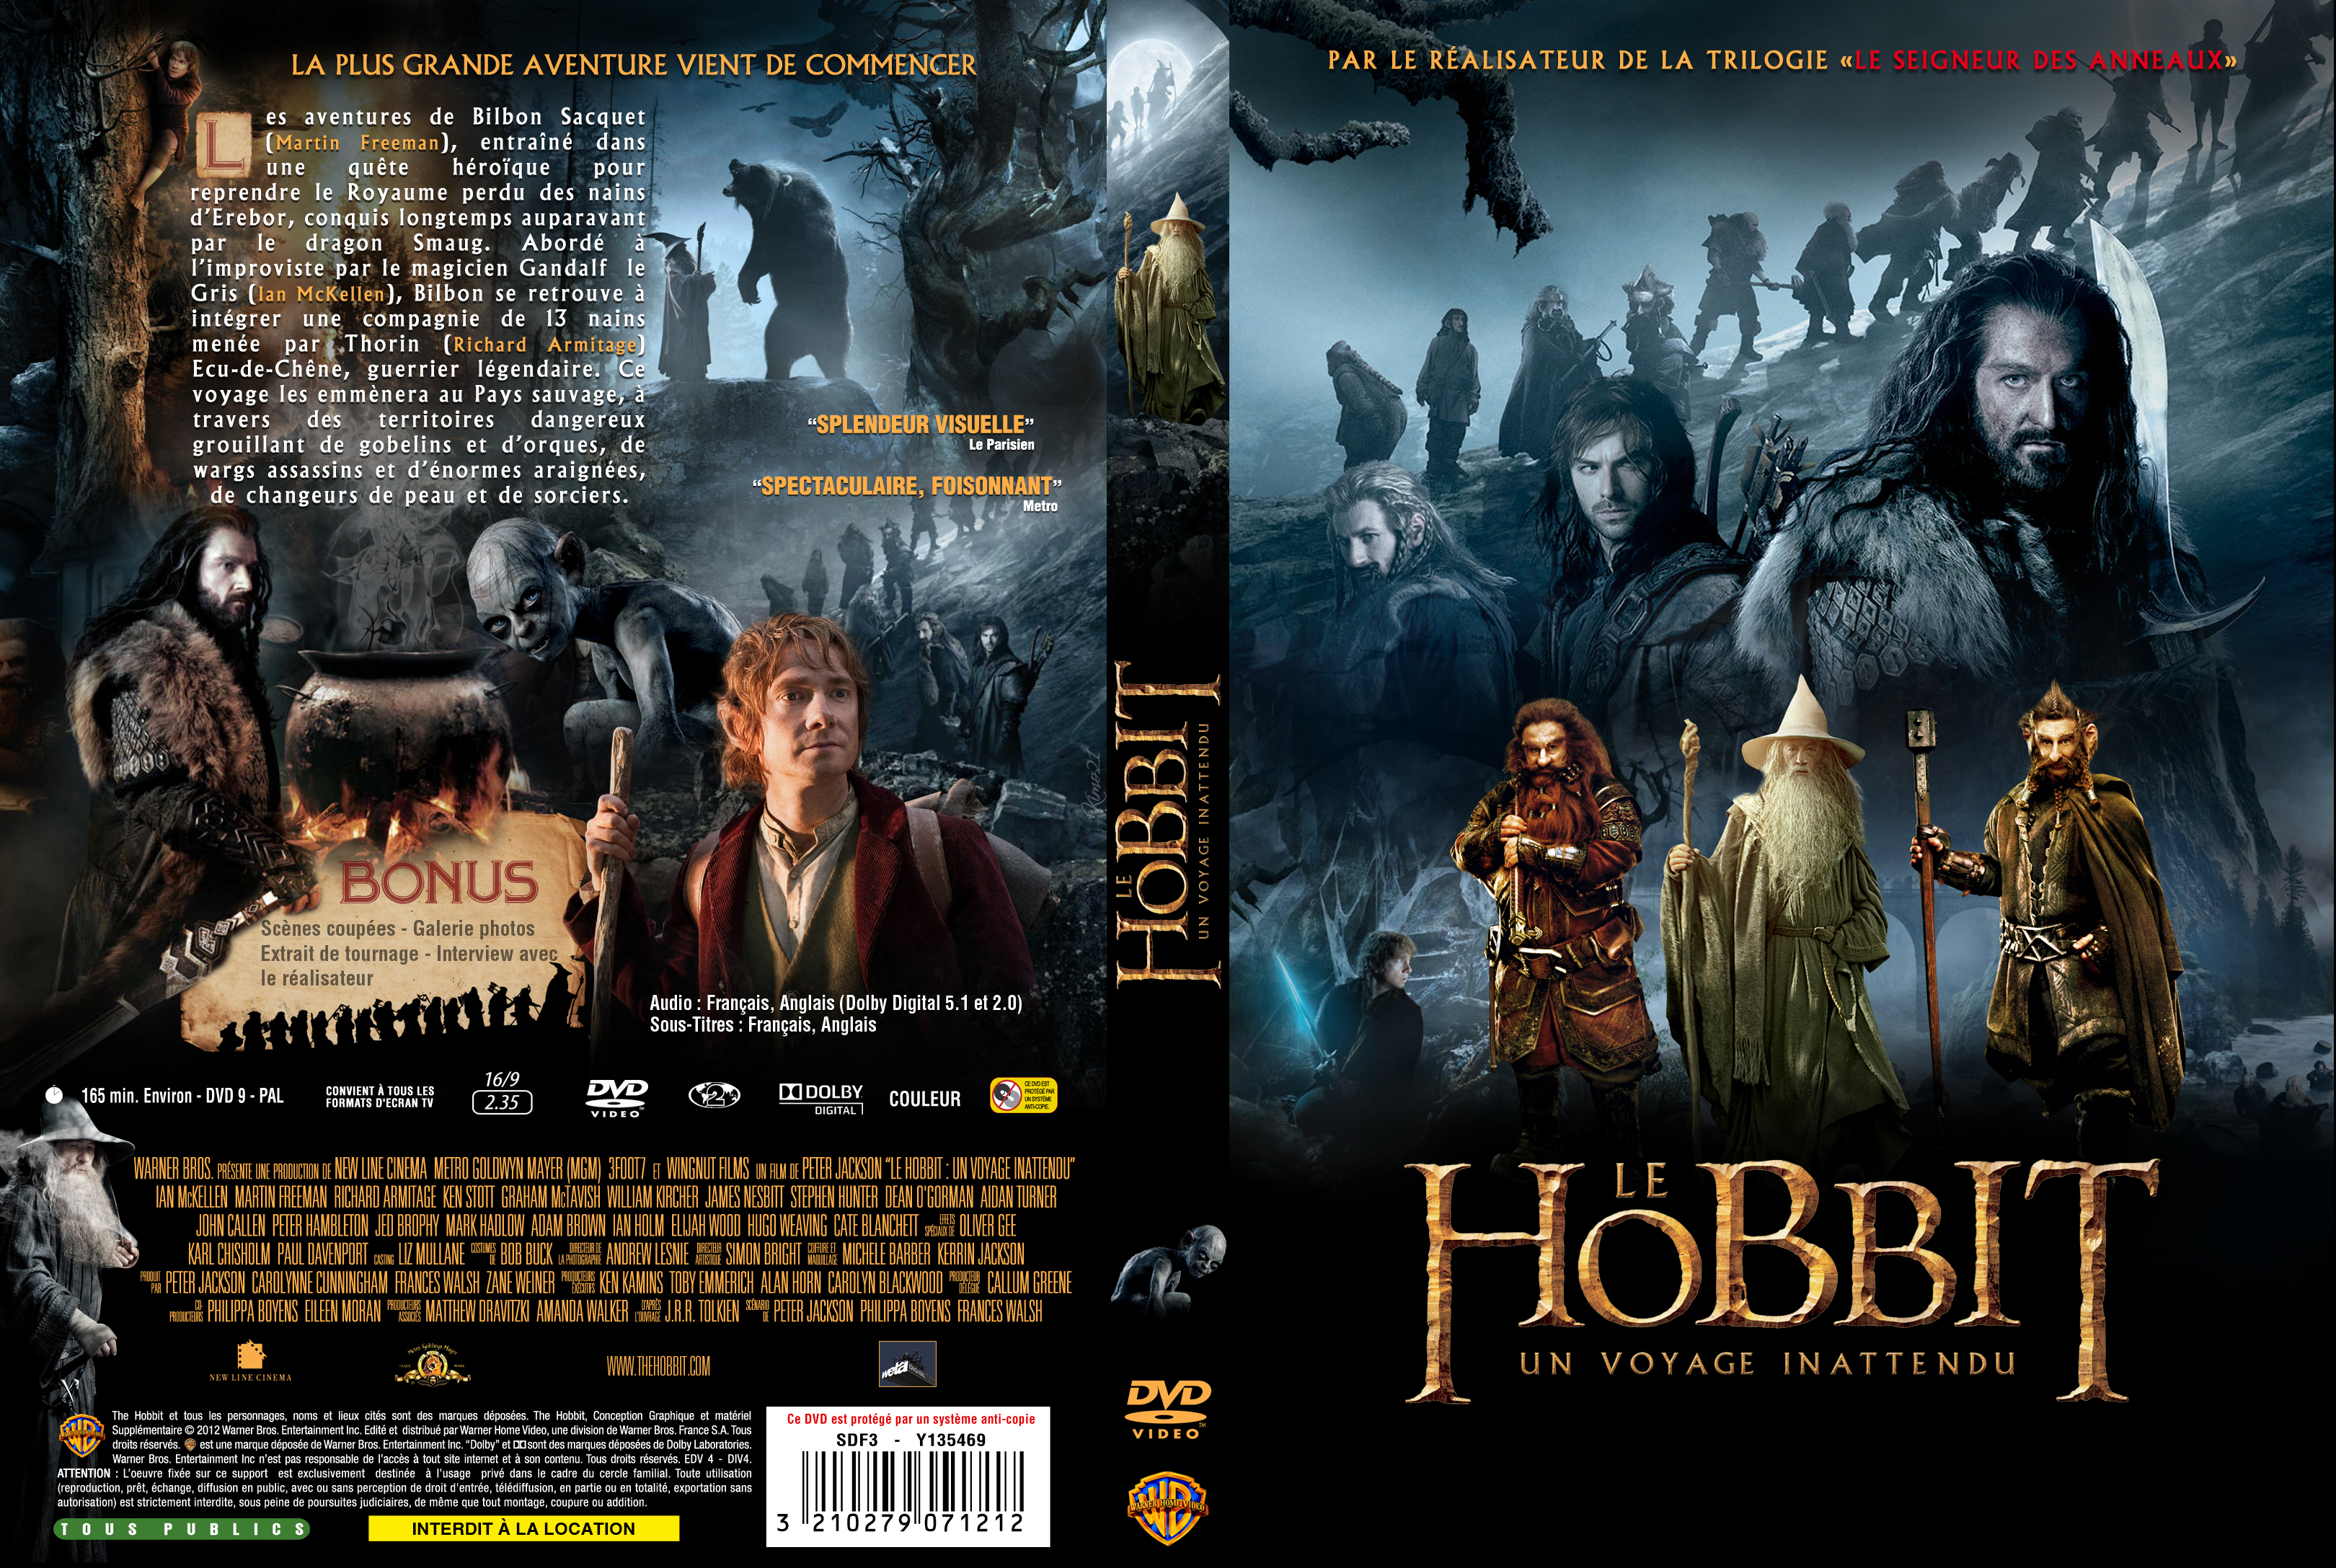 Jaquette DVD Le Hobbit un voyage inattendu custom v2